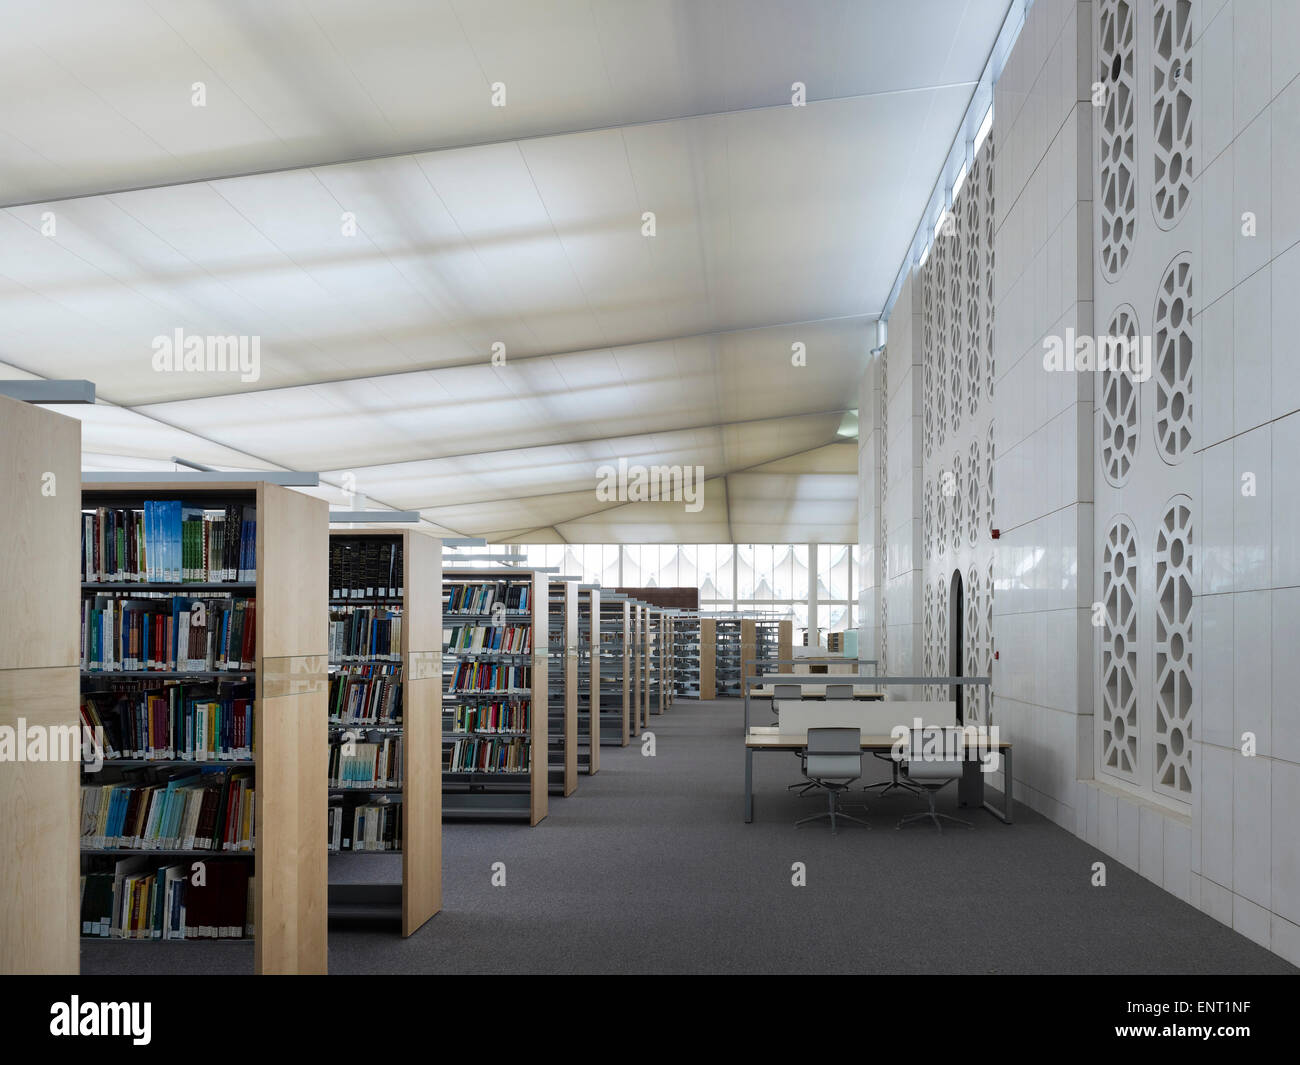 Buch-Gänge mit Leseecke. King Fahad National Library, Riyadh, Saudi Arabien. Architekt: Gerber Architekten, 2013. Stockfoto